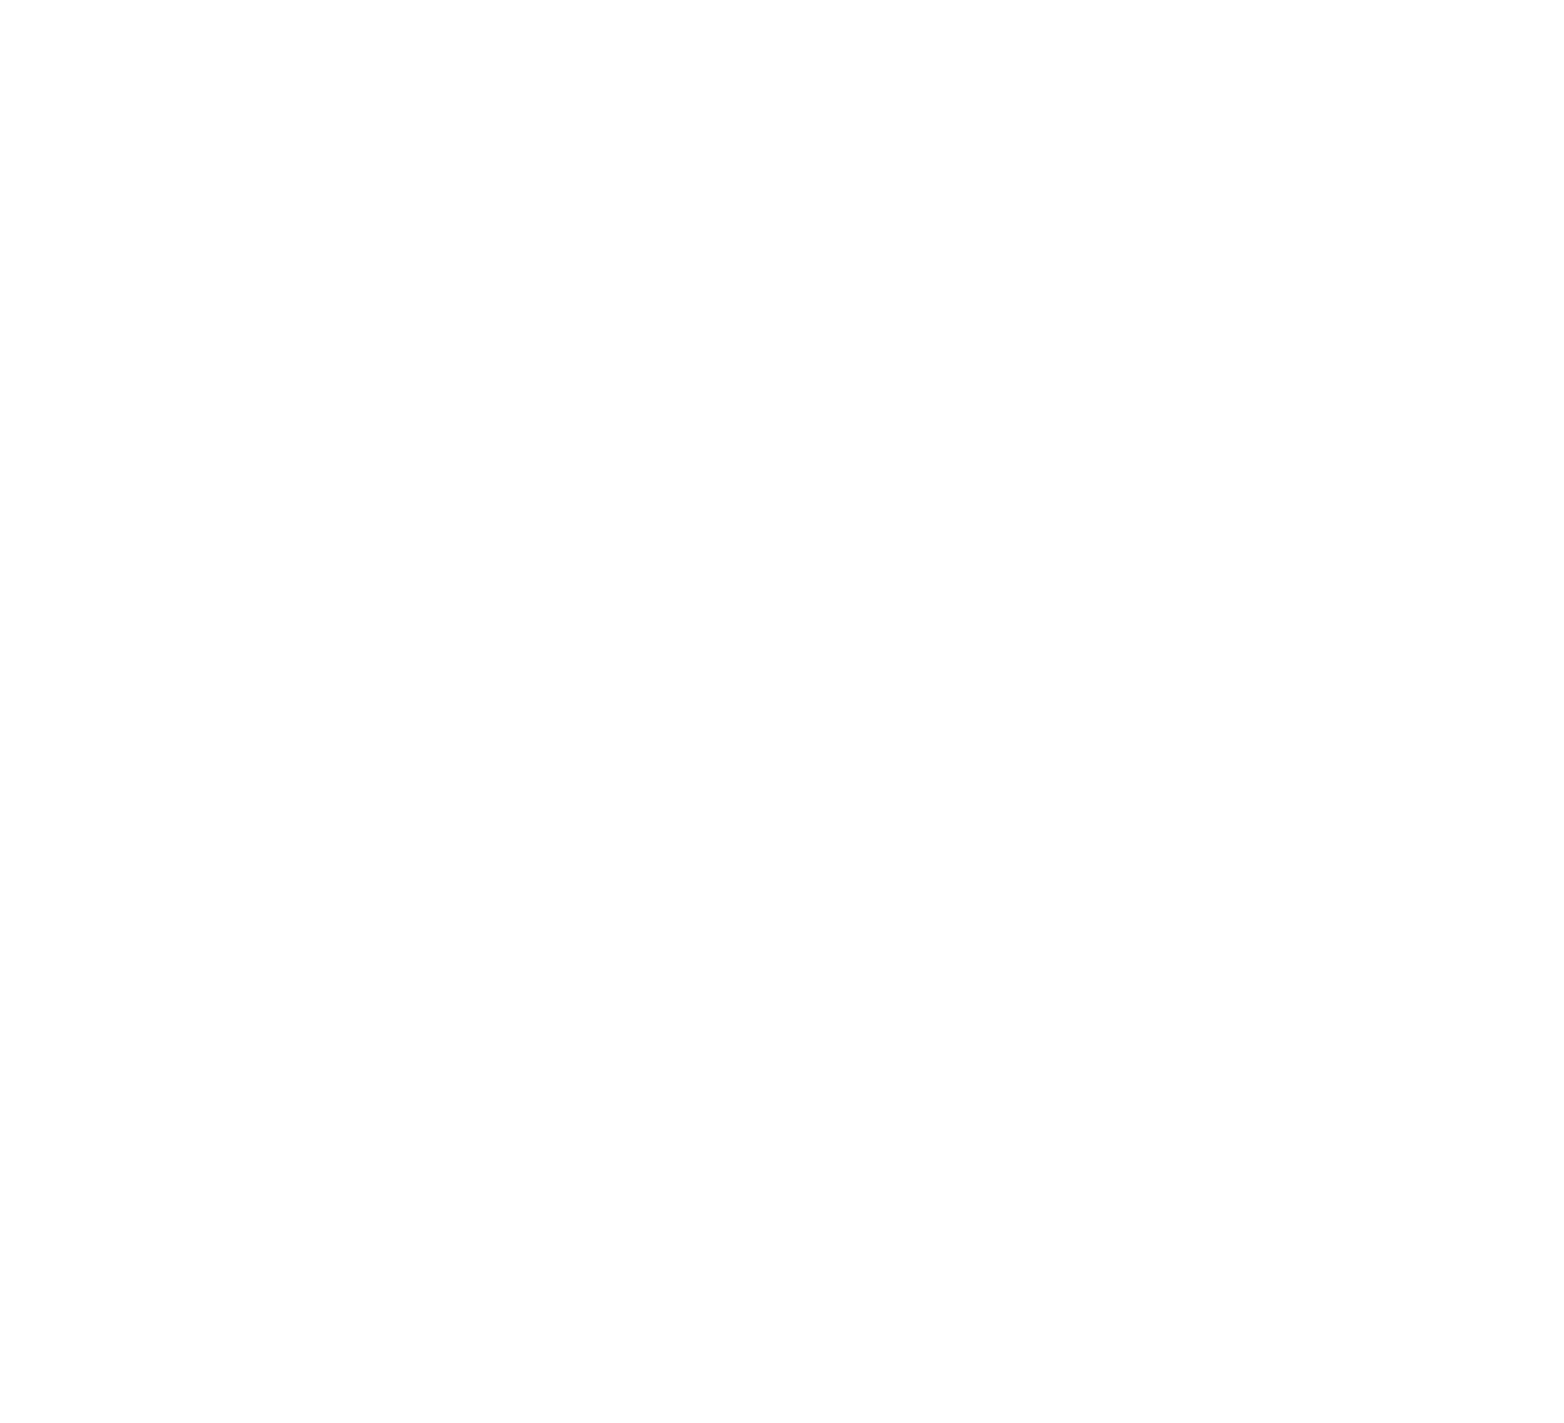 Fortress REIT logo for dark backgrounds (transparent PNG)